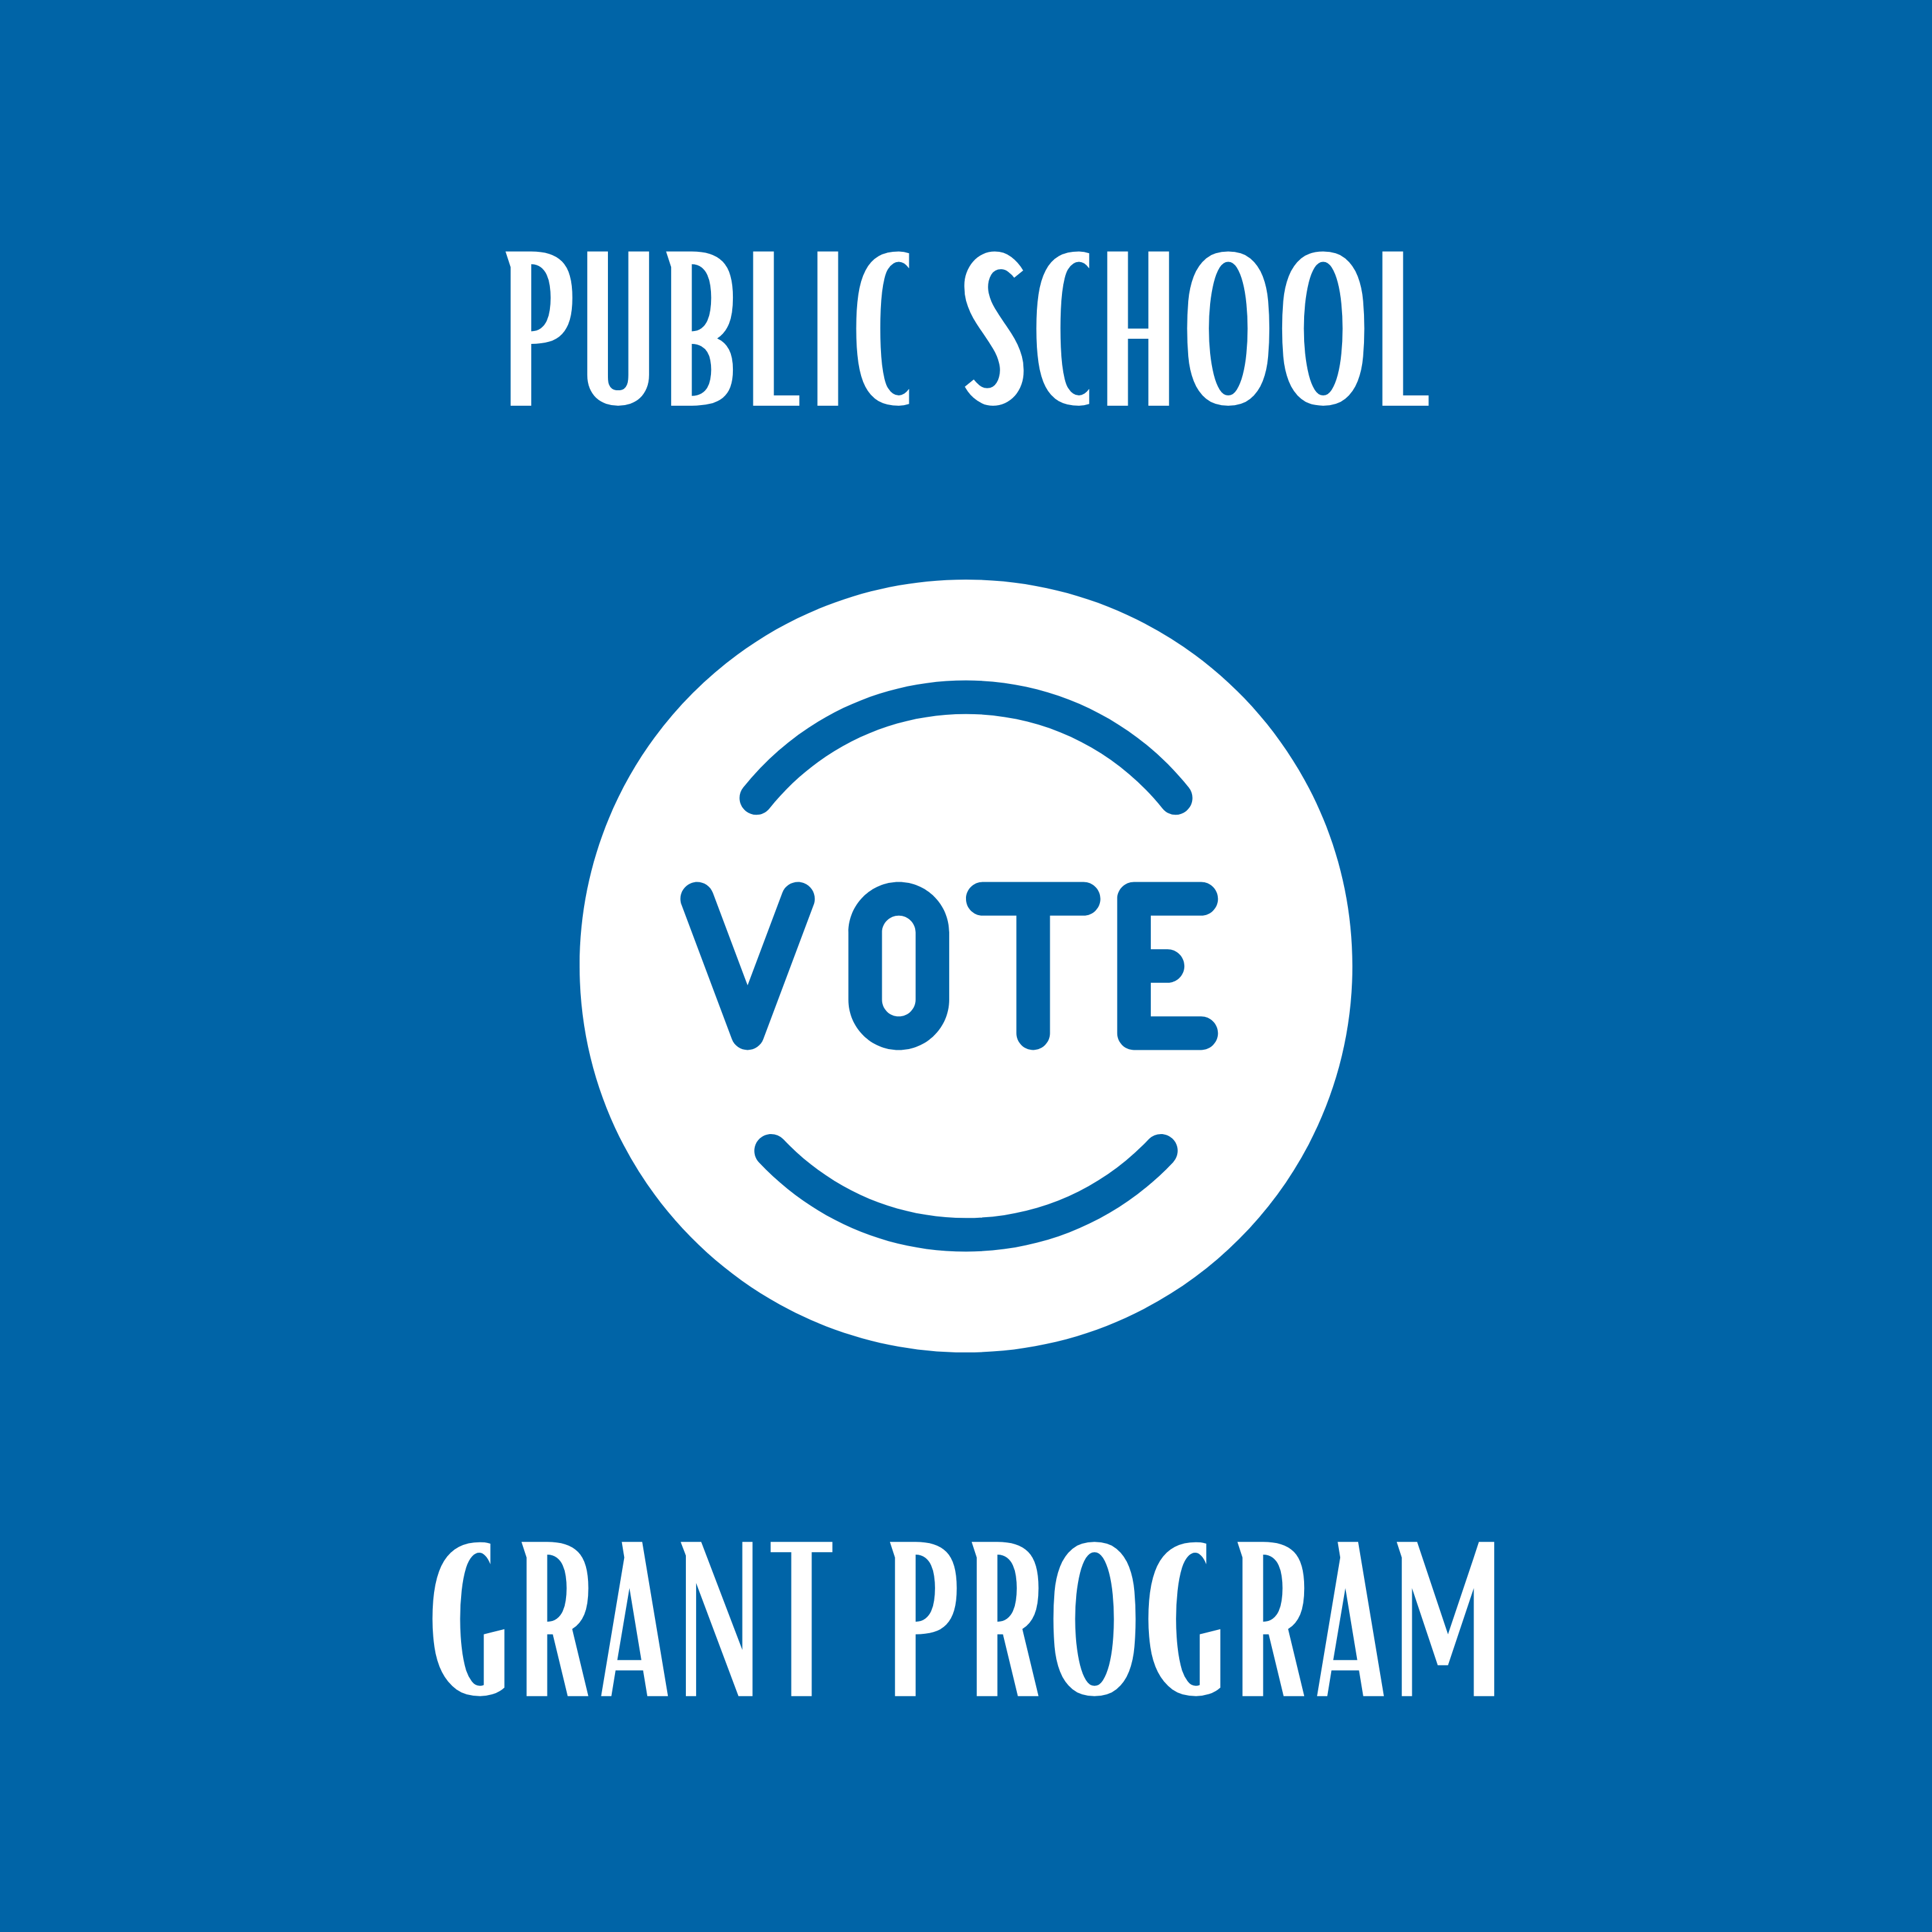 Voting now open for our Public School Grant Program